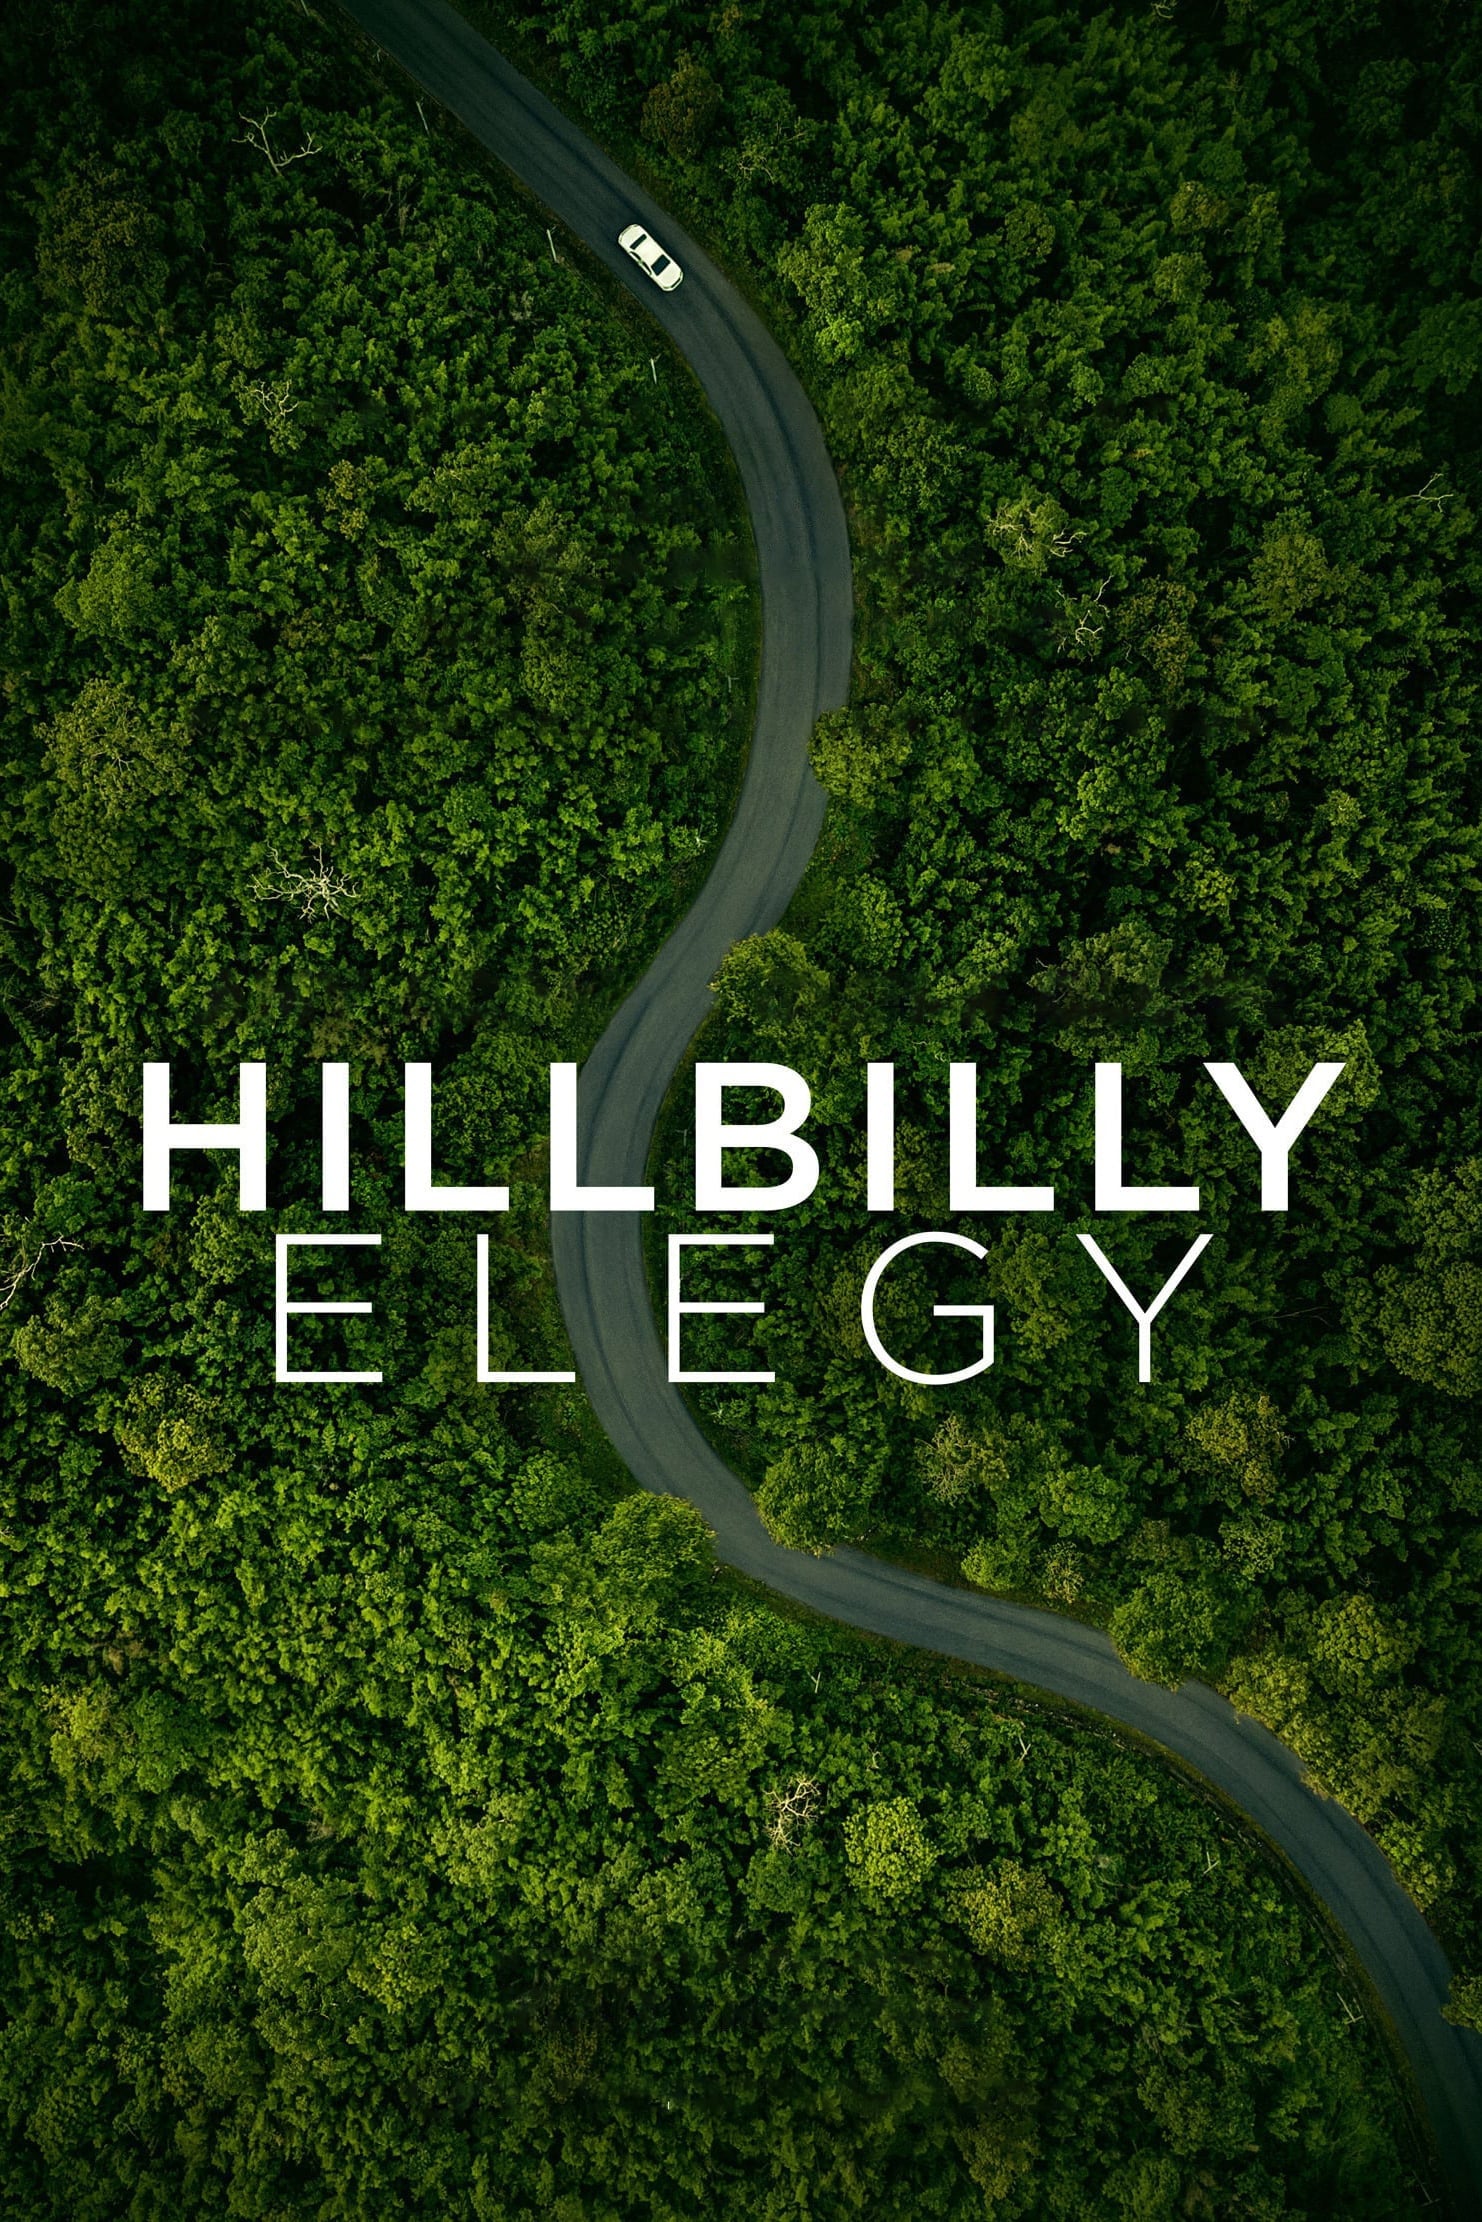 Hillbilly-Elegie